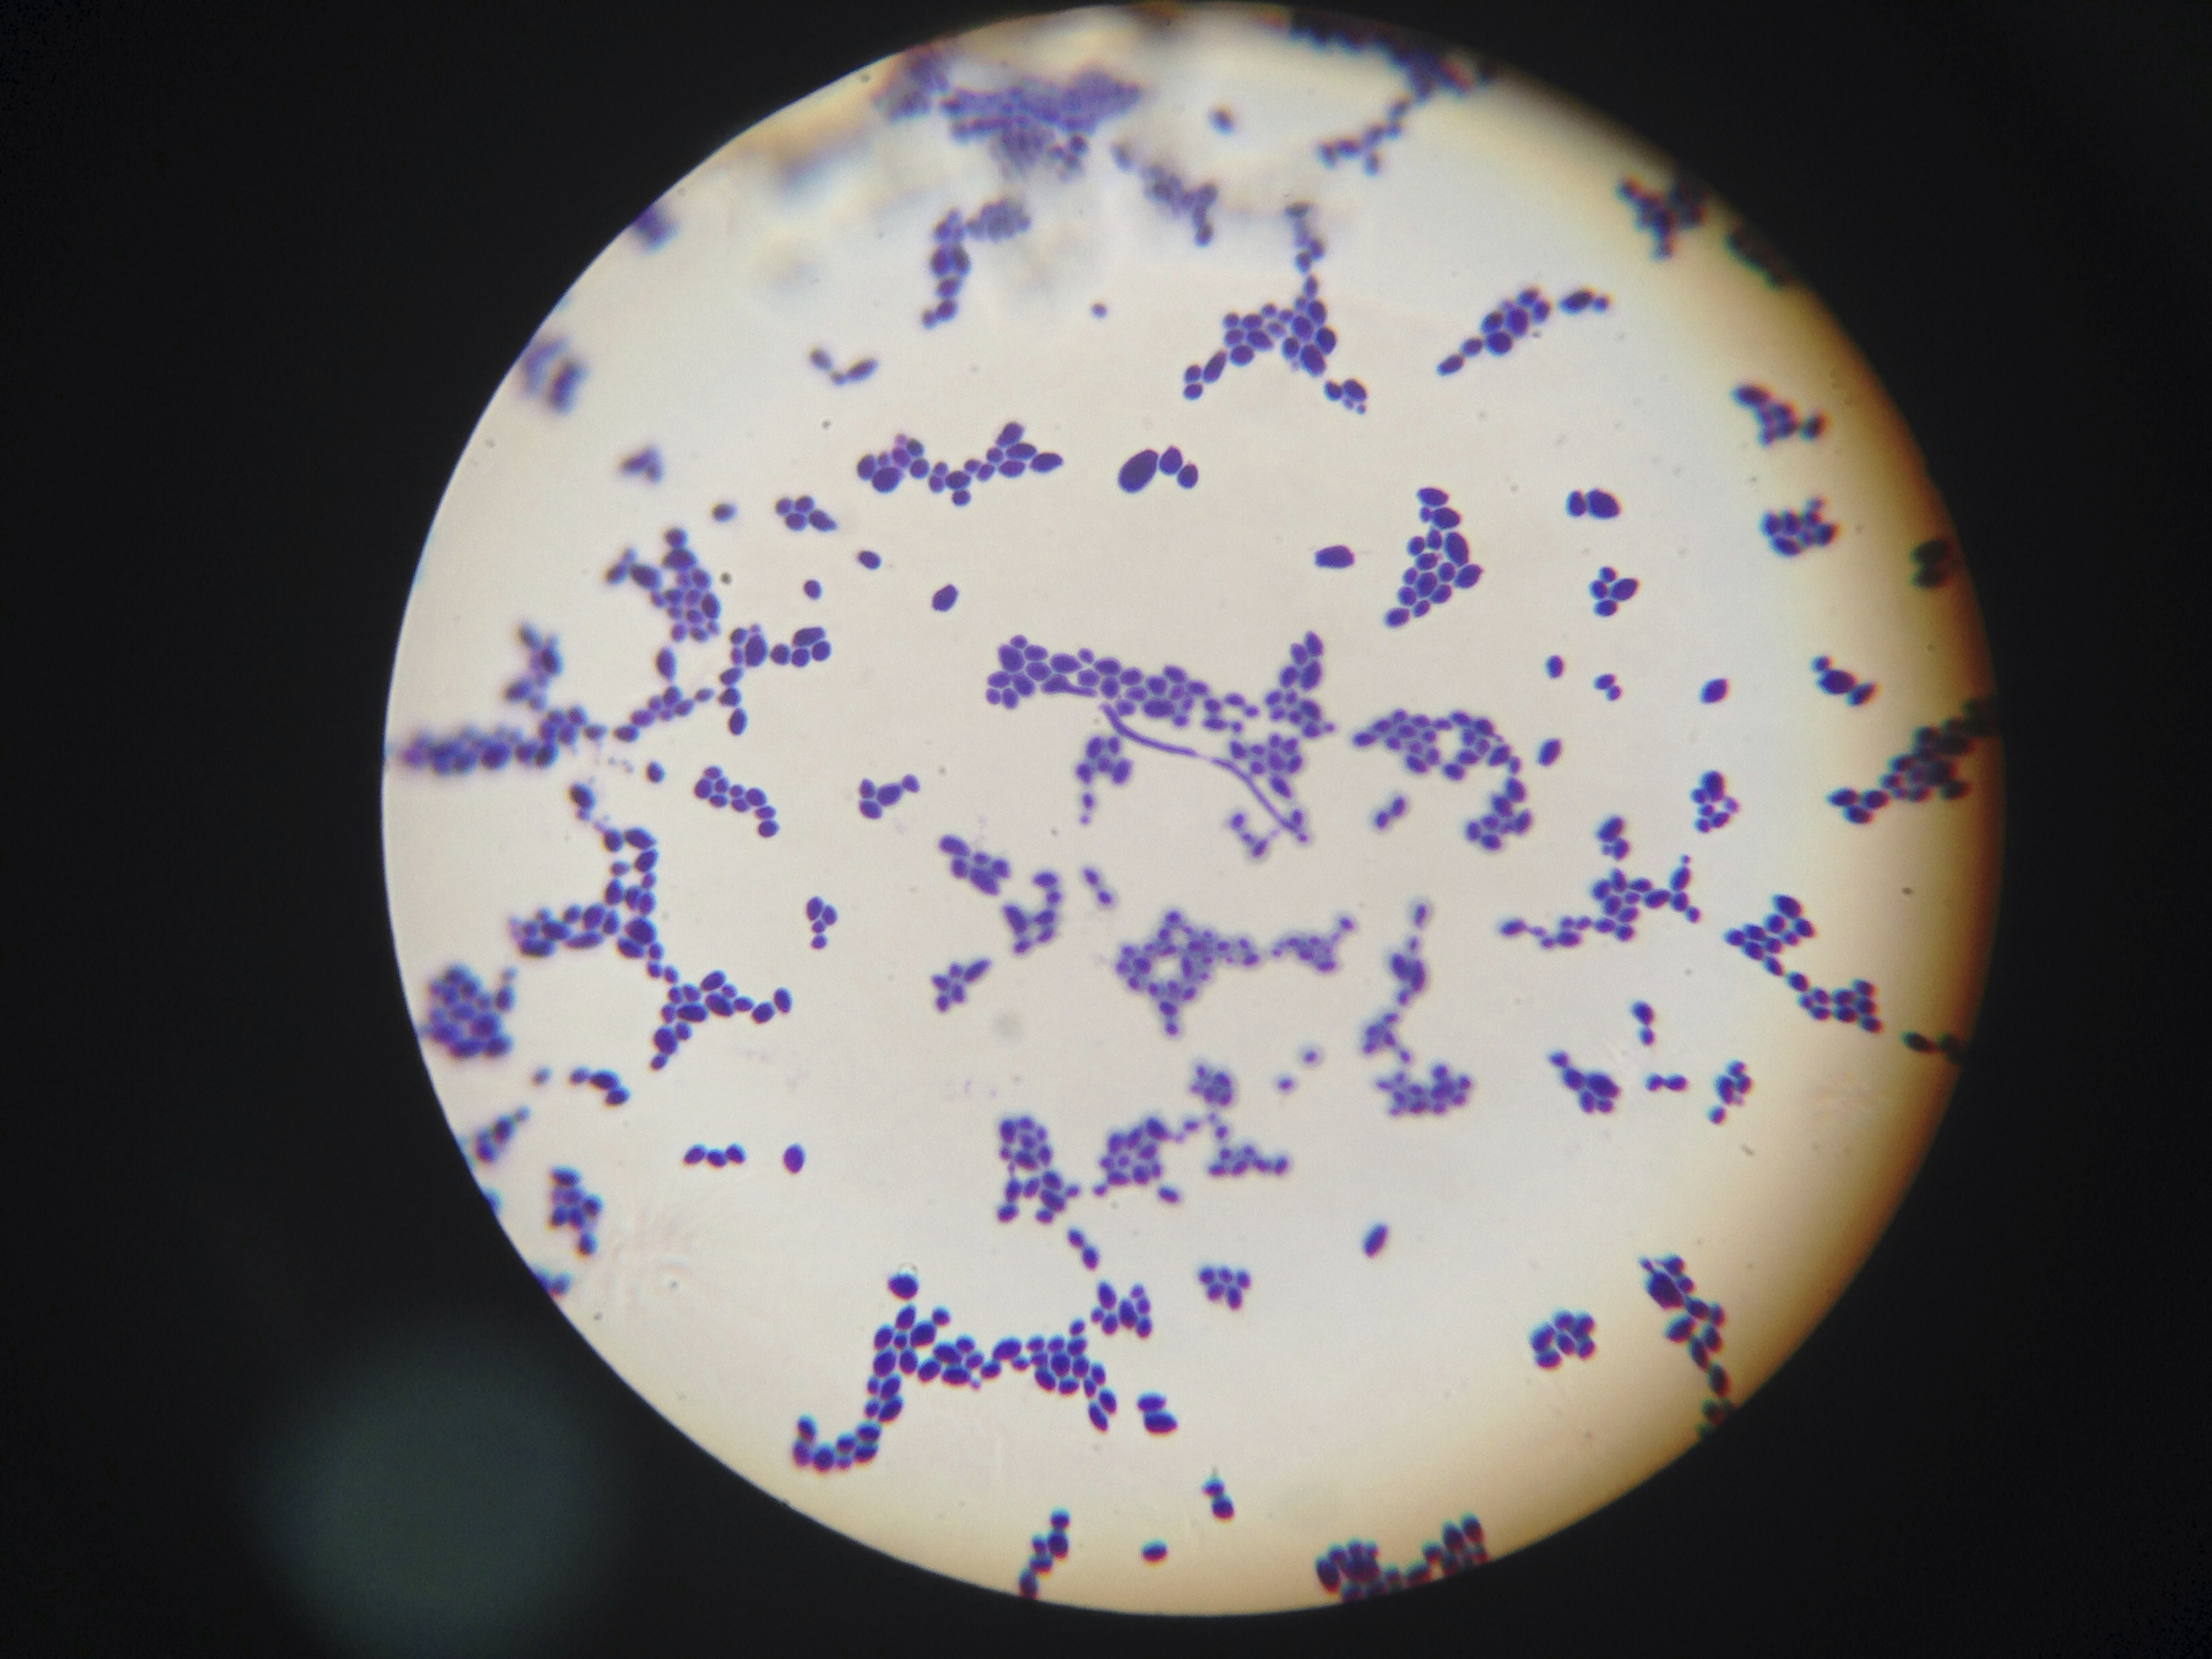 Споры candida. Кандида альбиканс микроскопия. Кандида альбиканс под микроскопом. Грибы кандида микроскопия мазка.